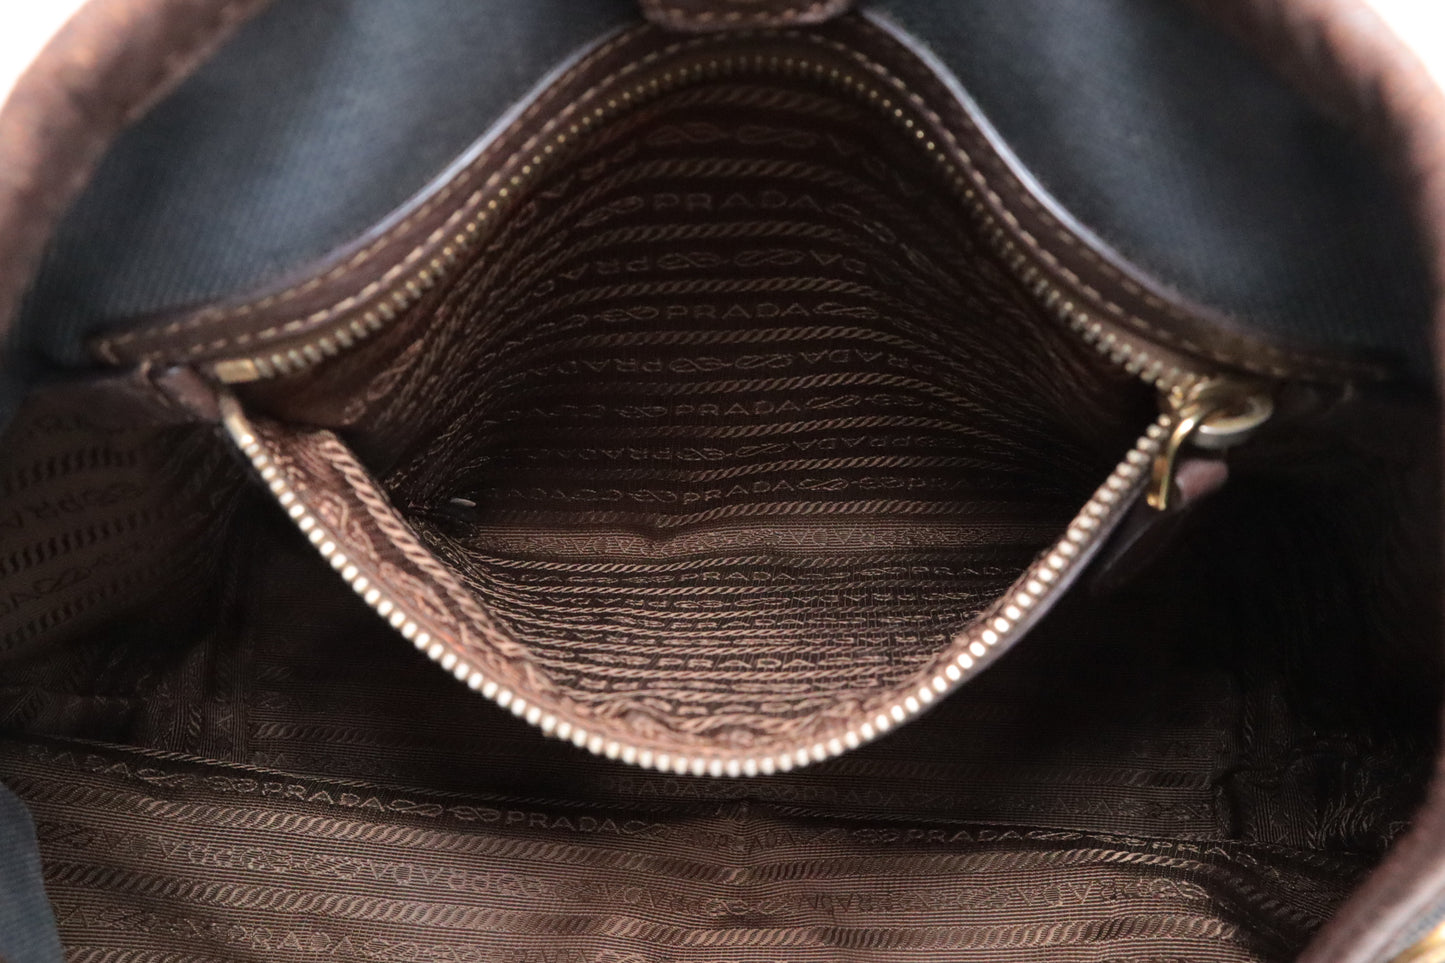 Prada Logo Handbag in Brown Leather and Navy Canvas